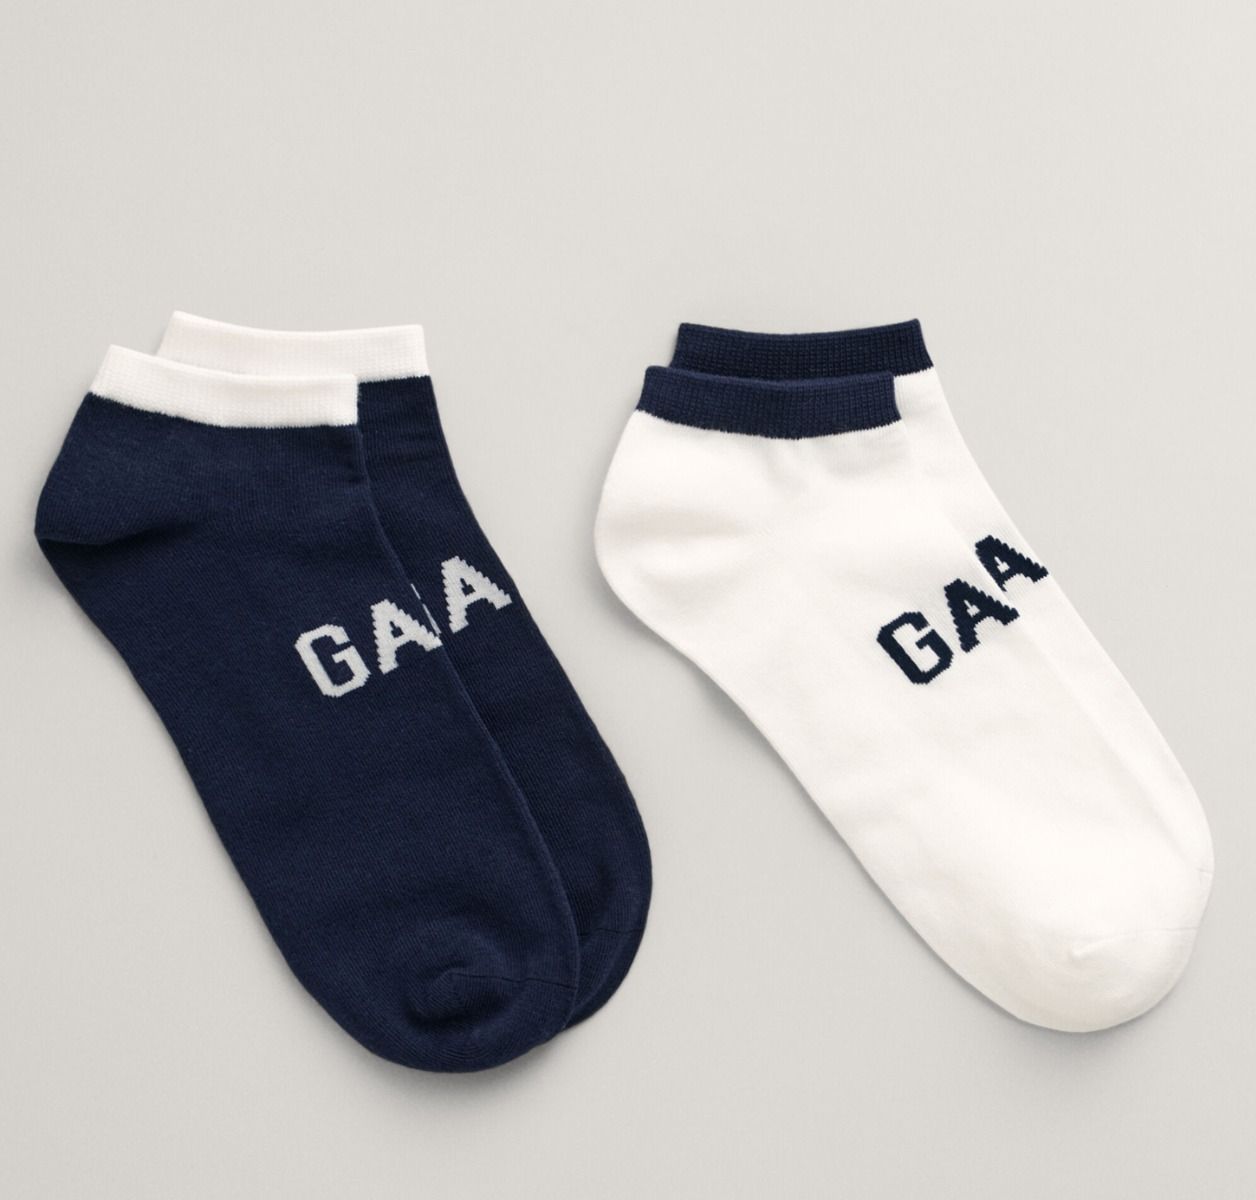 Gant Ανδρικές Κάλτσες 2 Ζεύγη 9960290-433 Σκούρο Μπλέ NEW ARRIVALS>ΑΝΔΡΑΣ>ΤΣΑΝΤΕΣ - ΑΞΕΣΟΥΑΡ